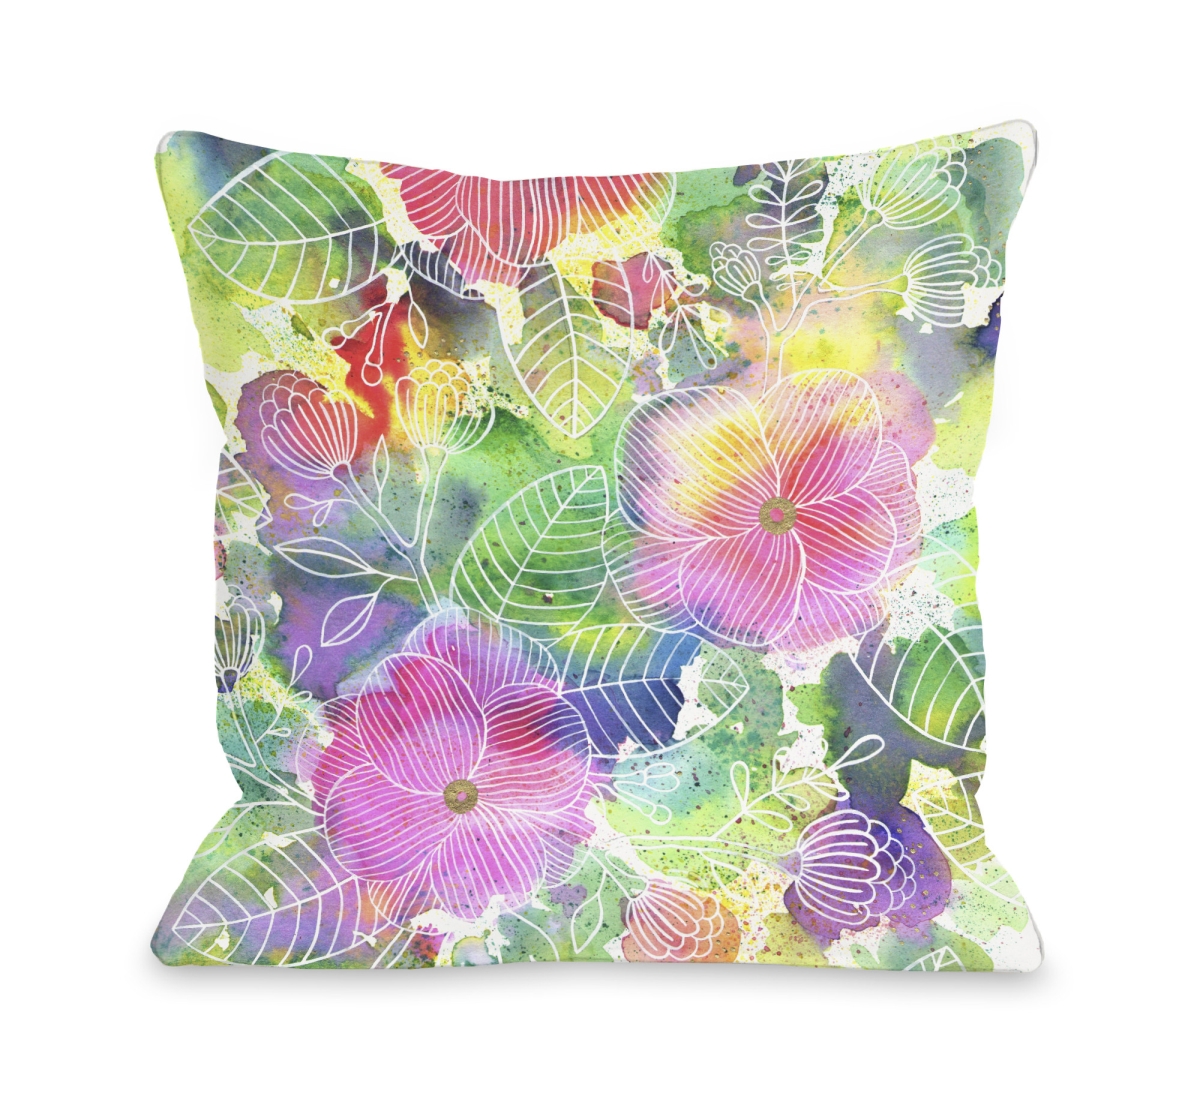 72692pl16o 16 X 16 In. Rainbow Splatter Flower Pillow Outdoor, Multicolor